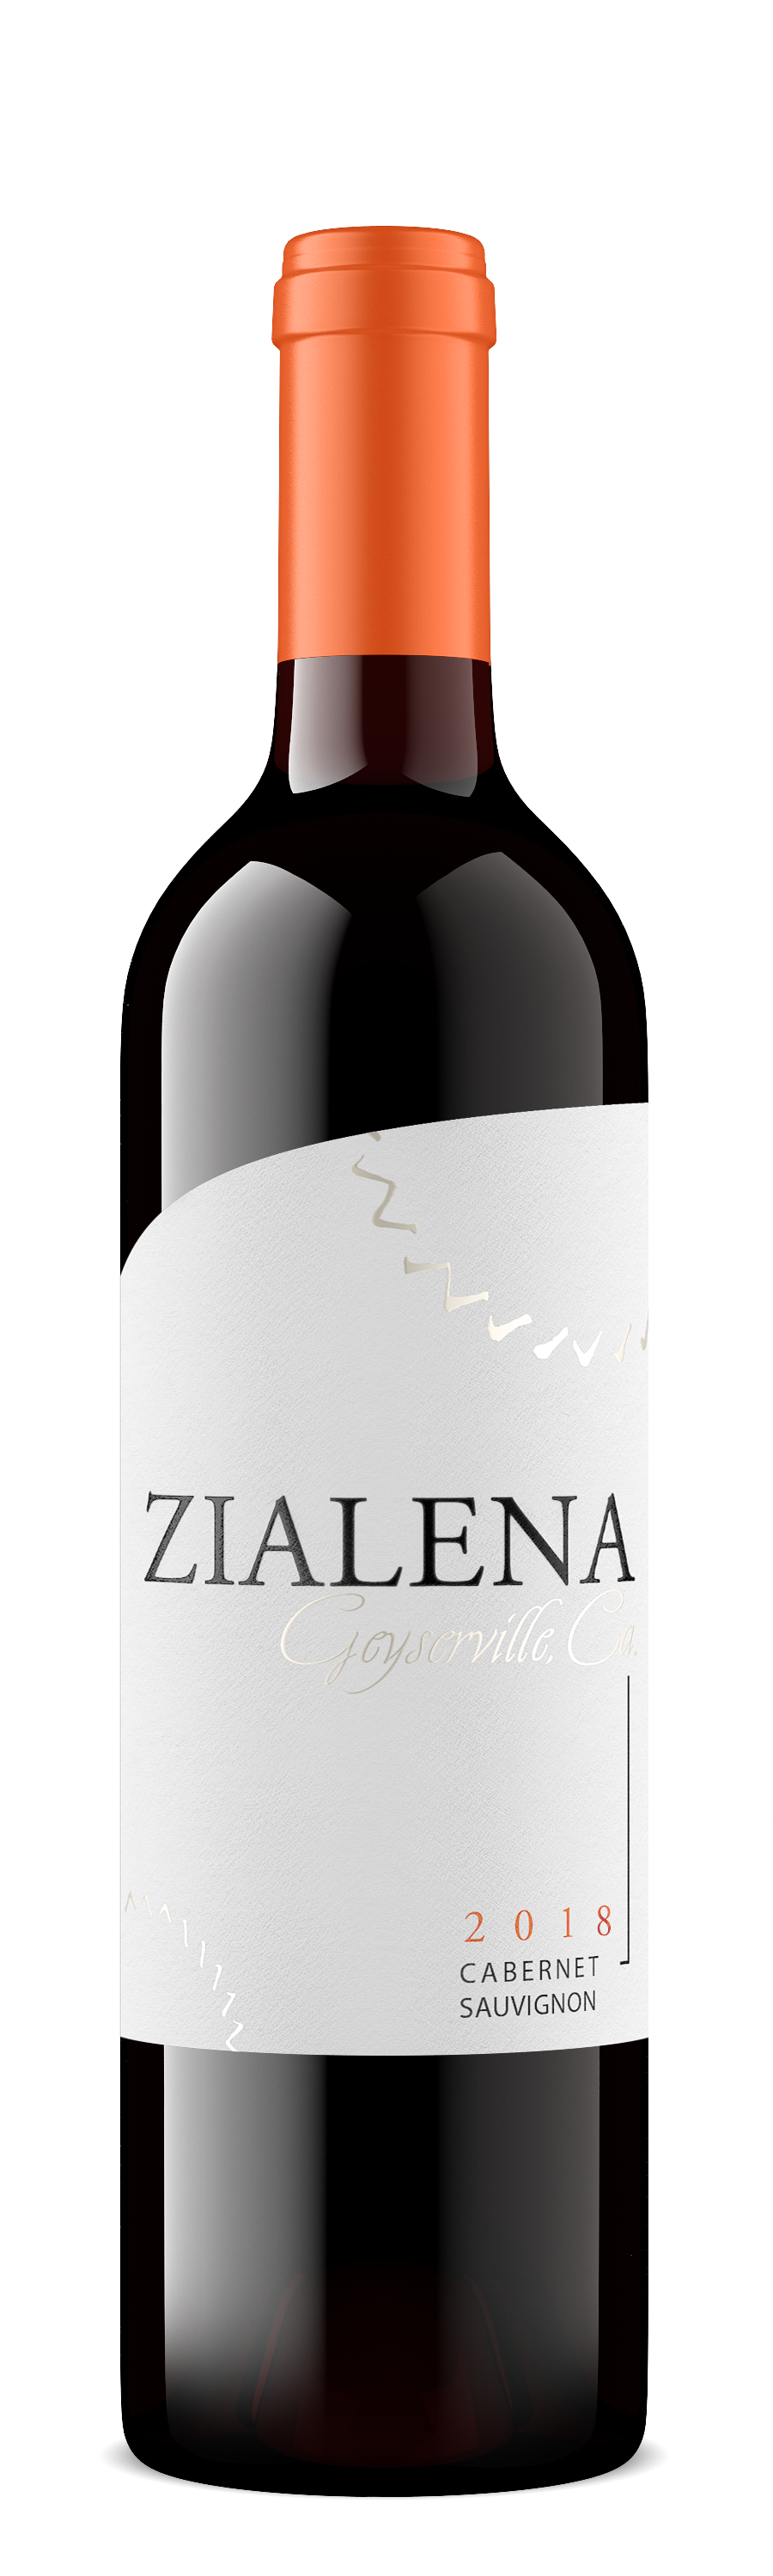 Store - Winery Zialena